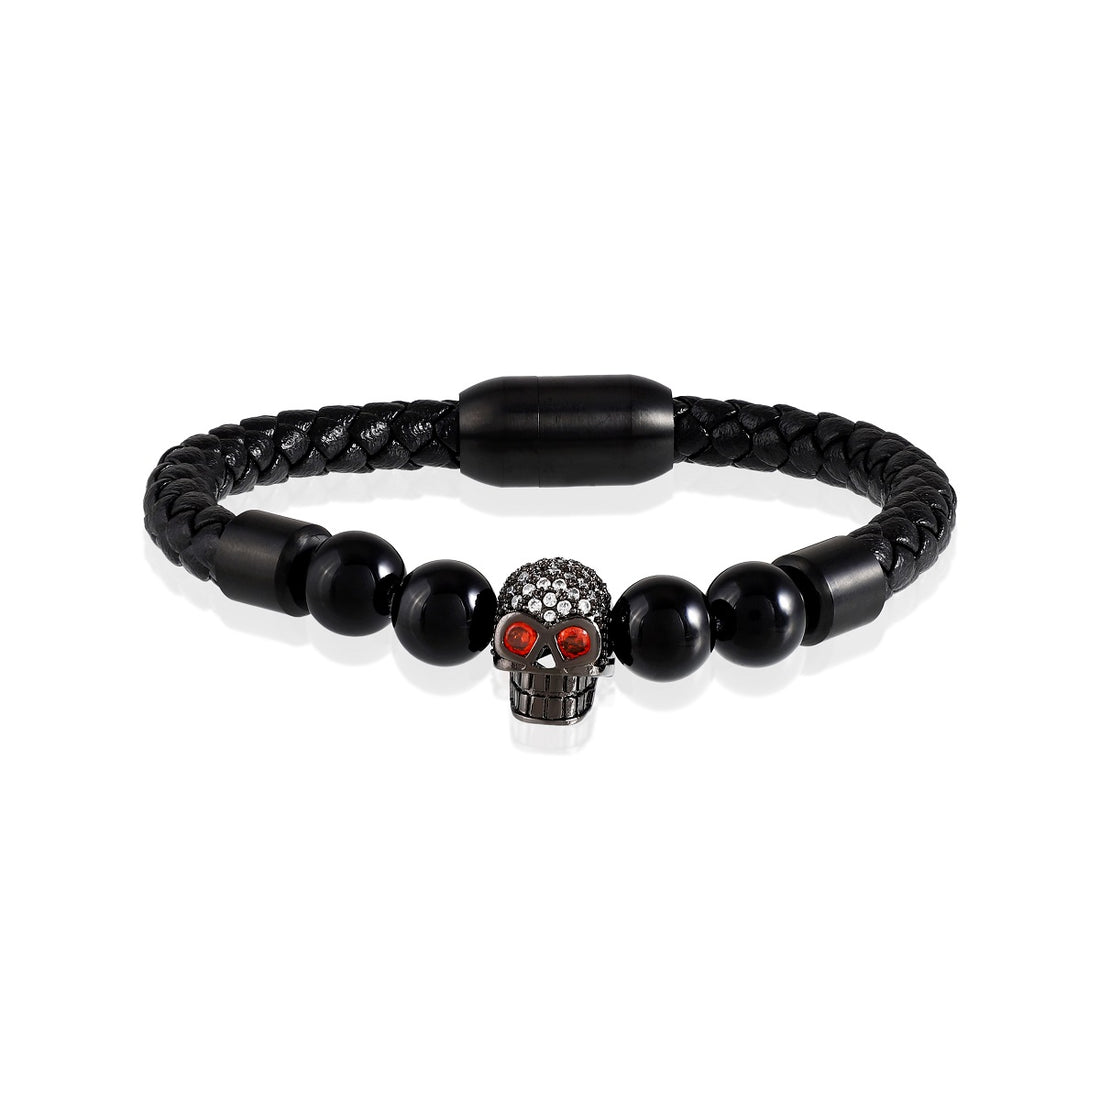 Black Onyx with Skull Charm Leather Bracelet